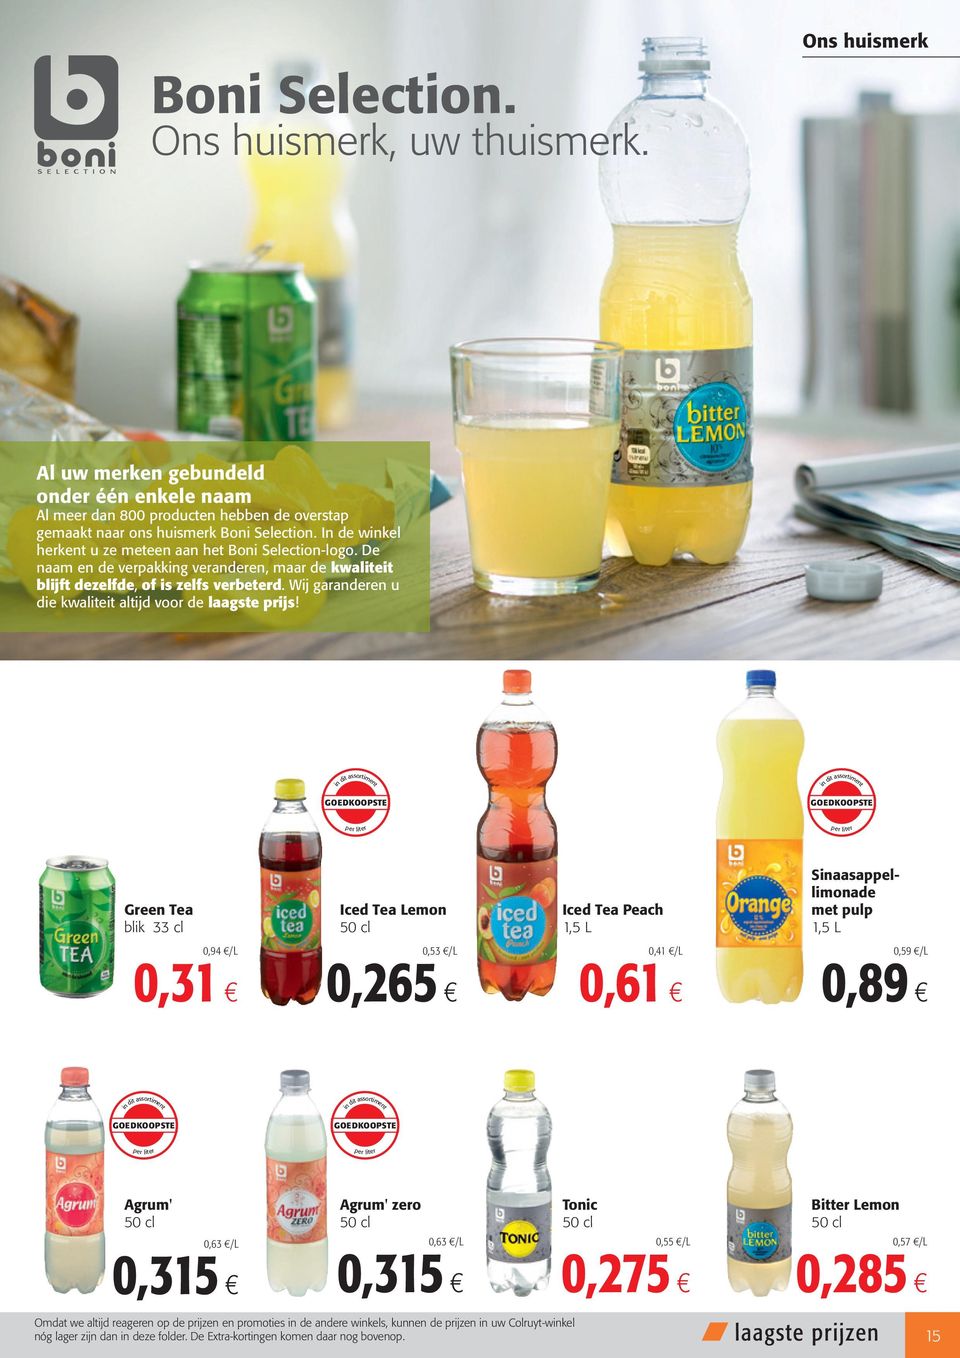 per liter per liter Green Tea blik 33 cl Iced Tea Lemon Iced Tea Peach 1,5 L Sinaasappellimonade met pulp 1,5 L 0,94 /L 0,31 0,53 /L 0,265 0,41 /L 0,61 0,59 /L 0,89 per liter per liter Agrum' 0,63 /L